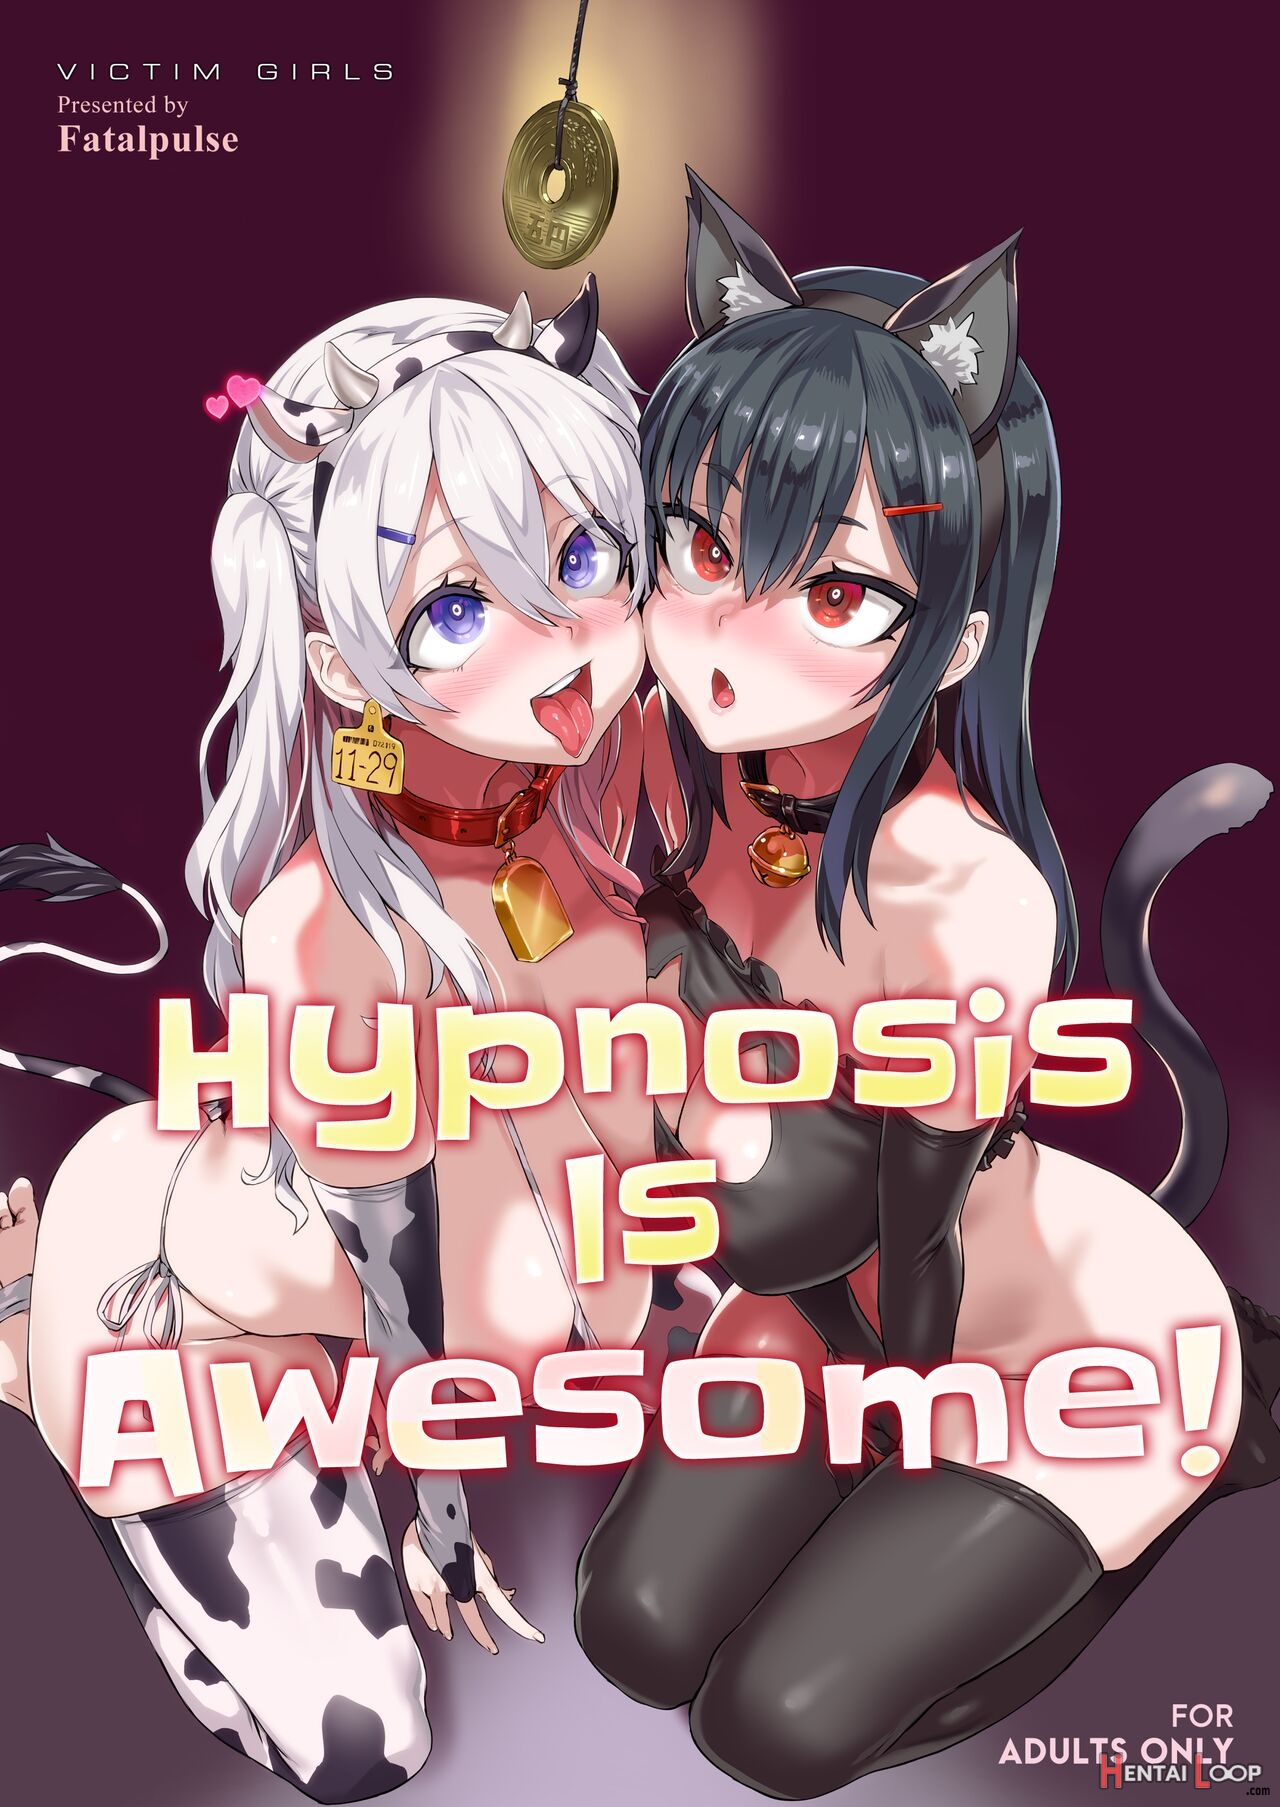 Henti hypnosis